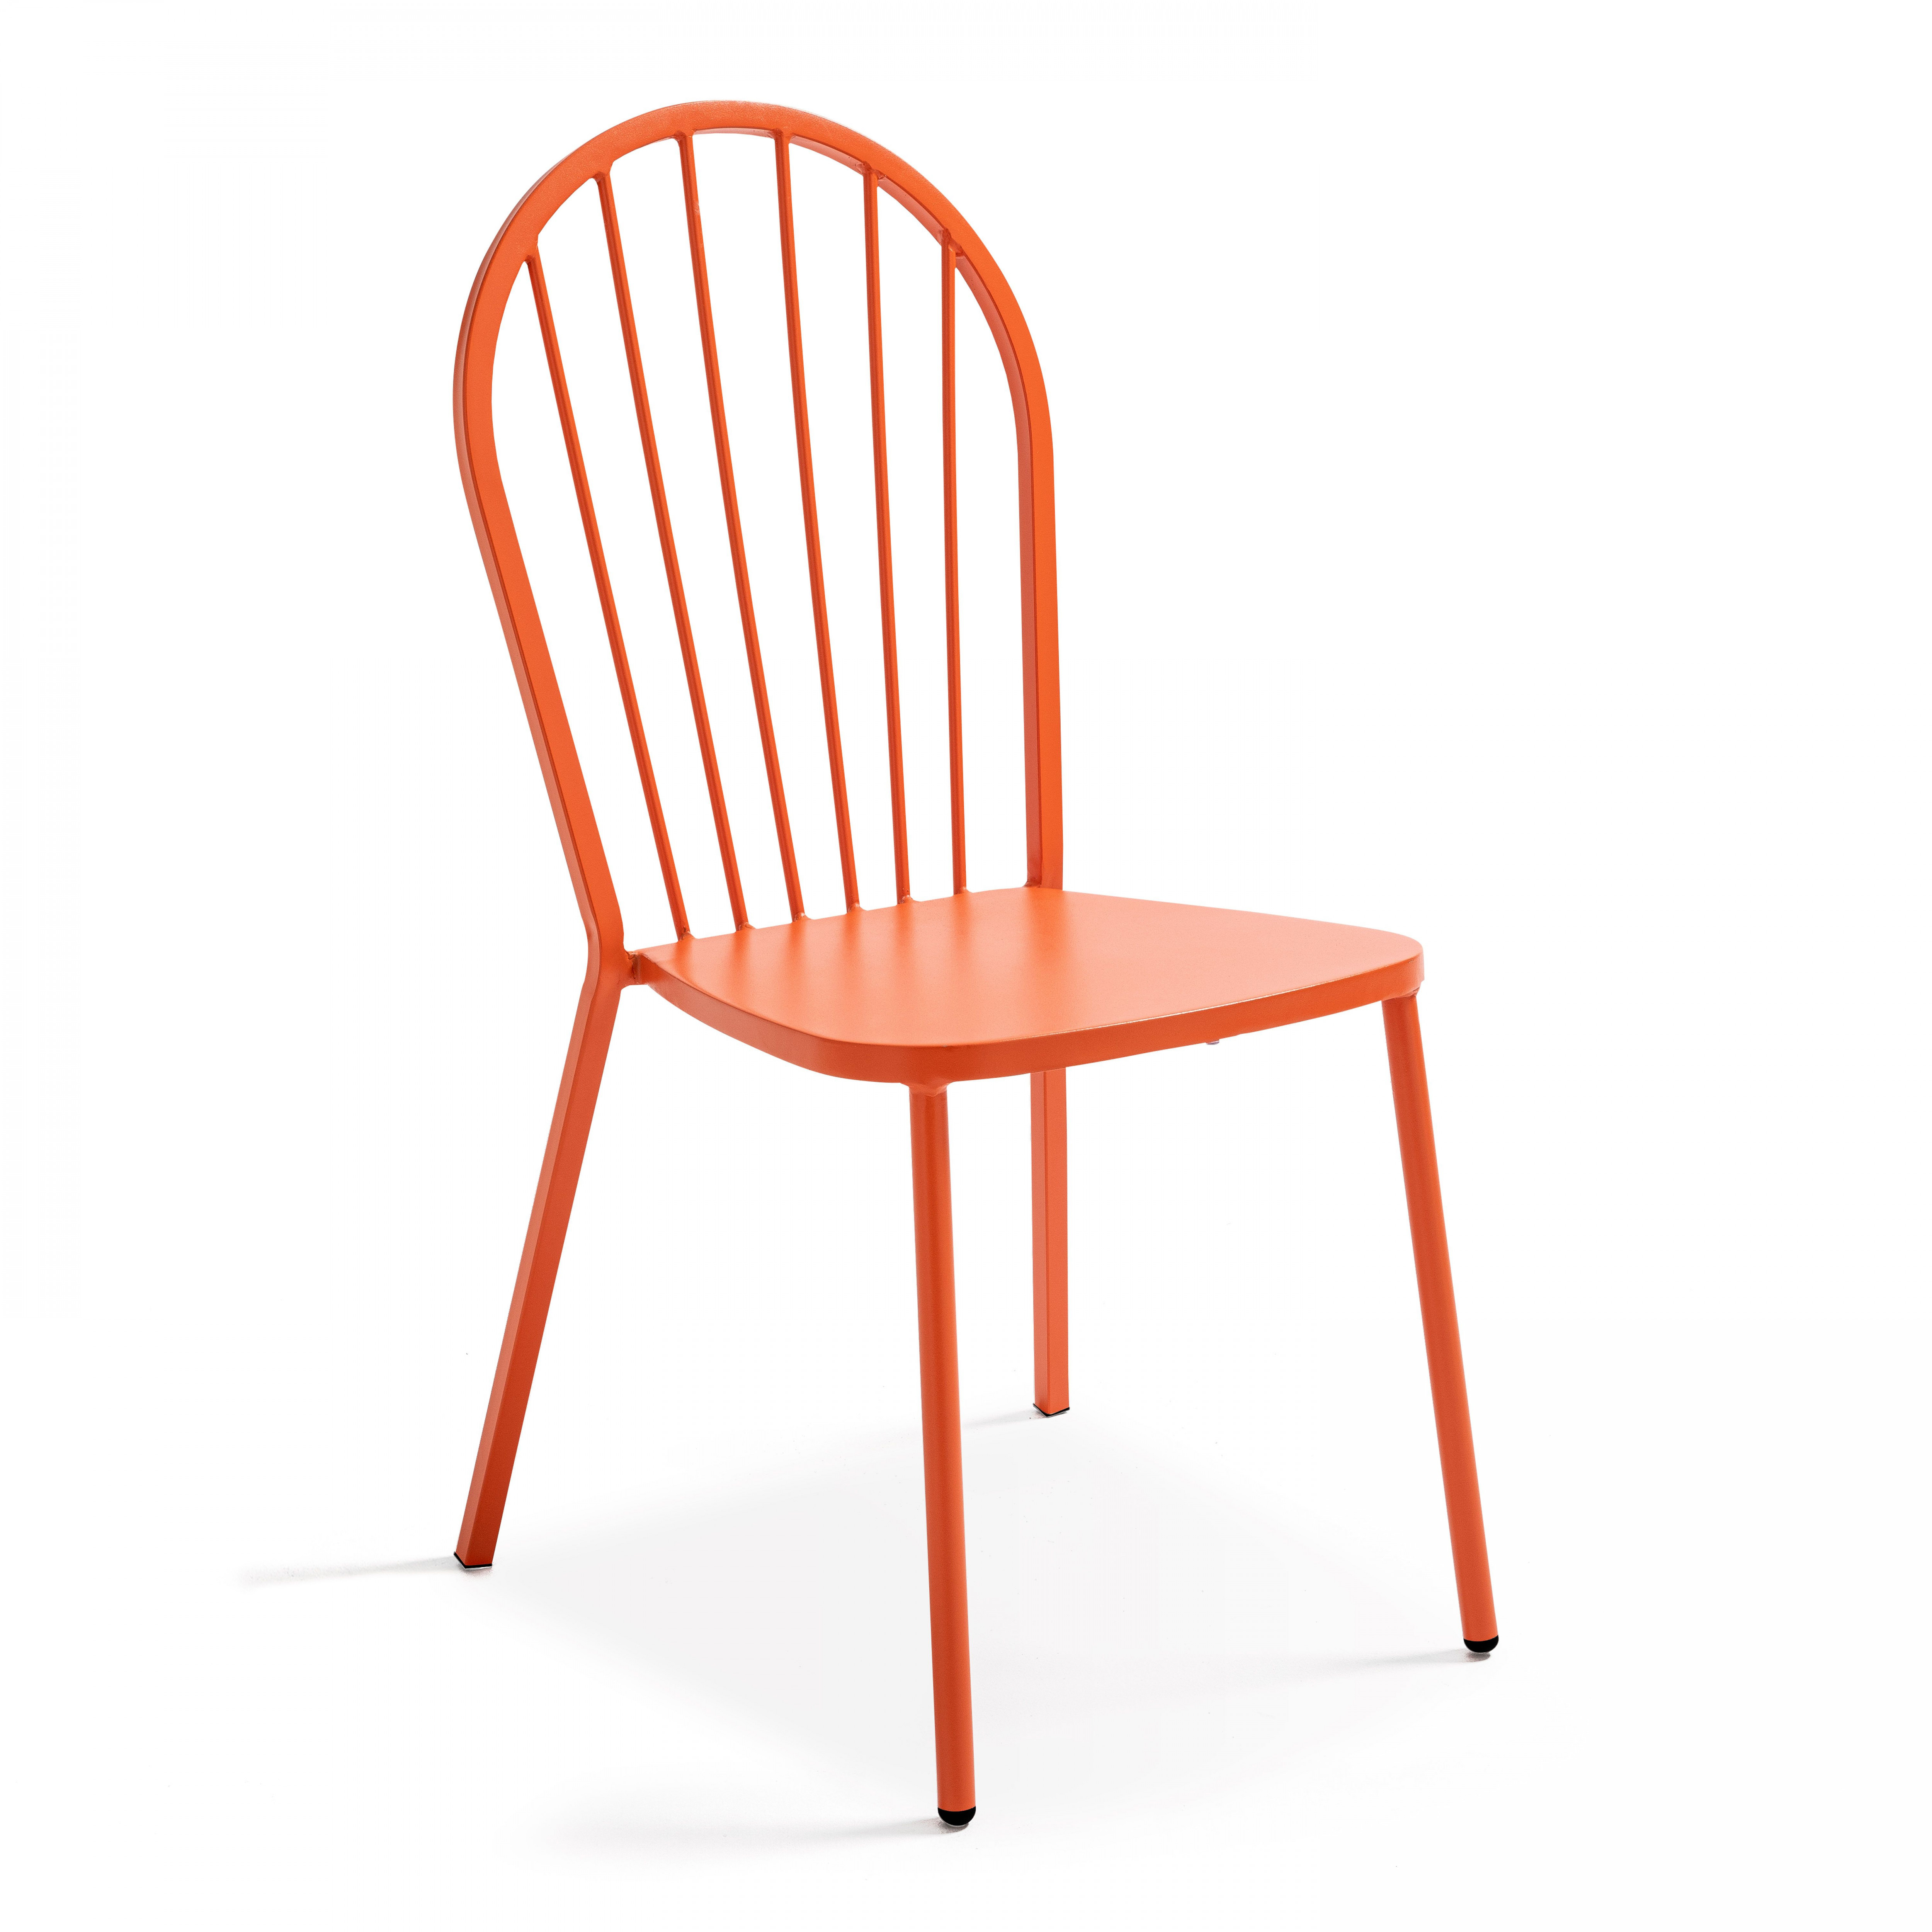 Chaise bistrot de jardin en métal orange